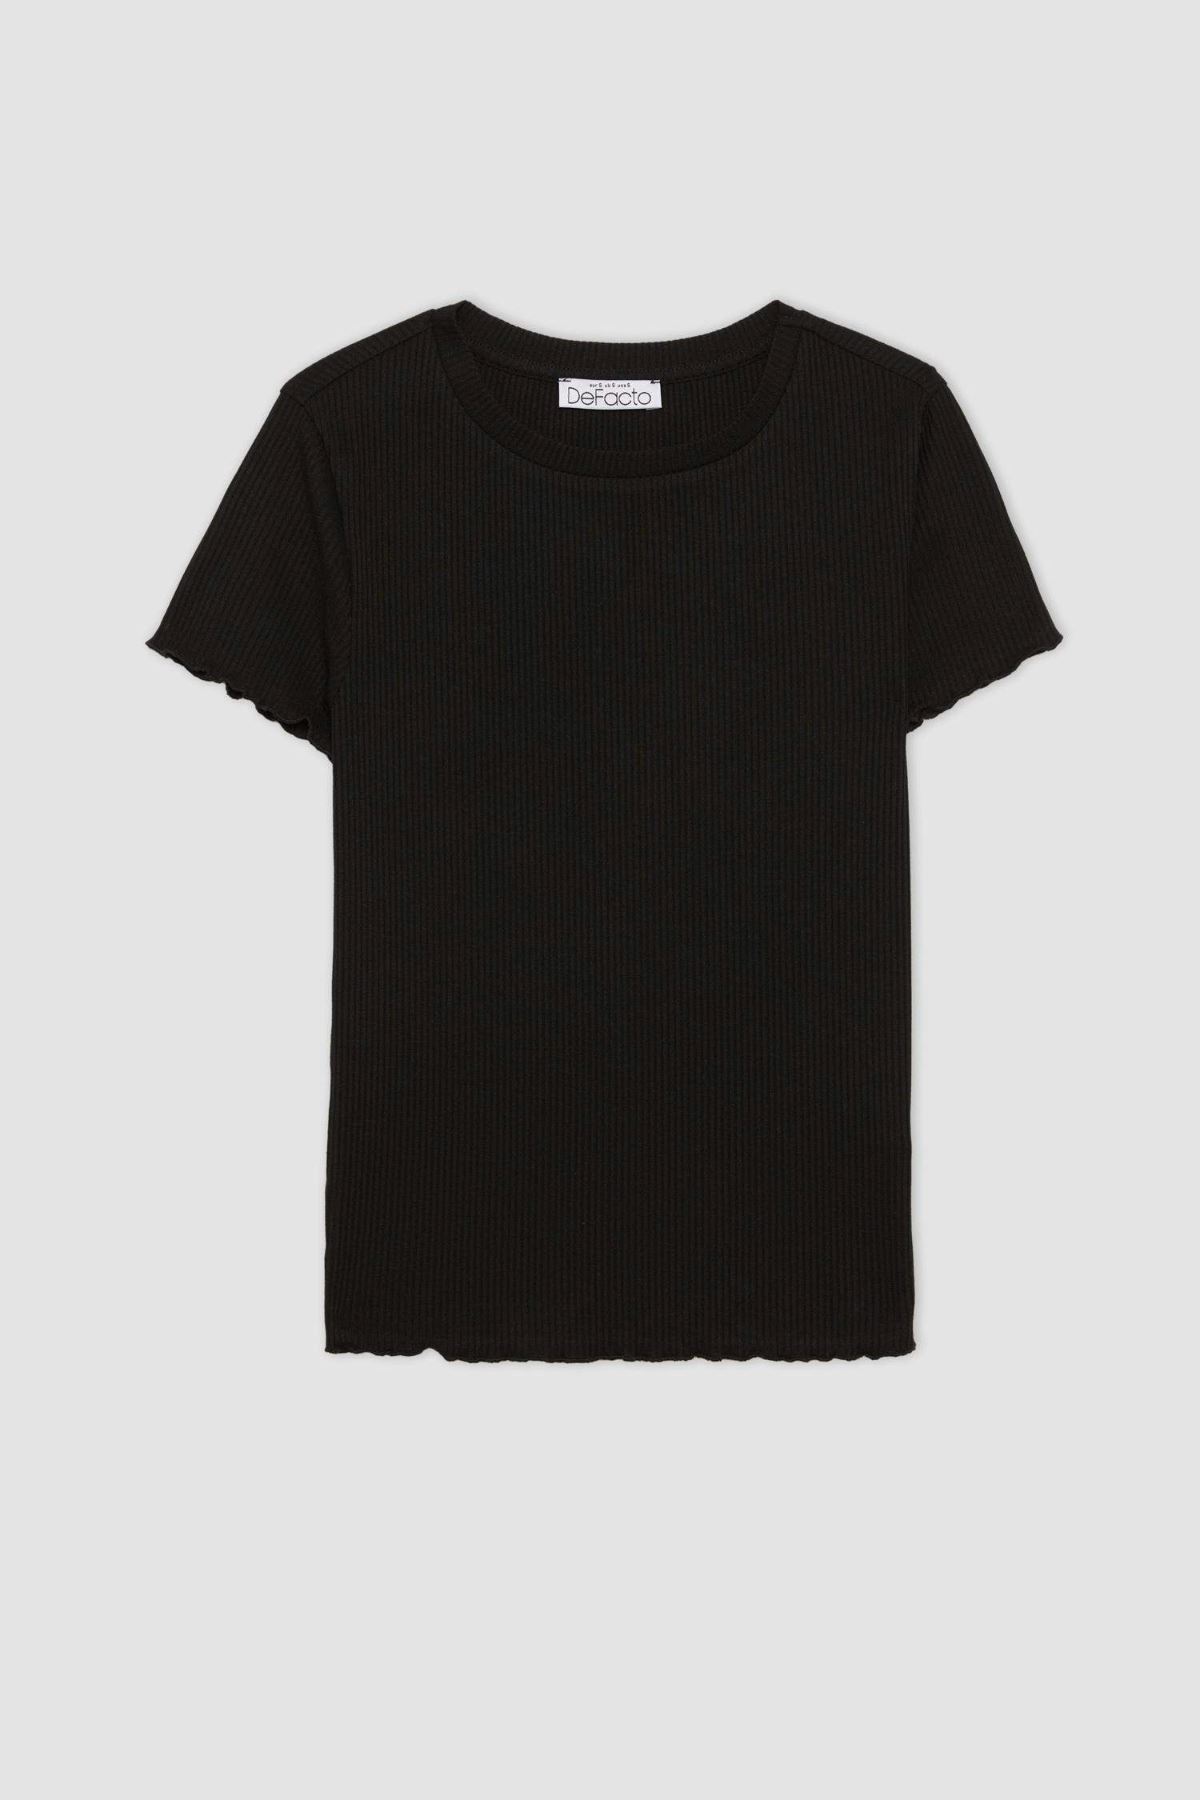 Defacto Kadın Siyah Tişört - K7064AZ/BK81